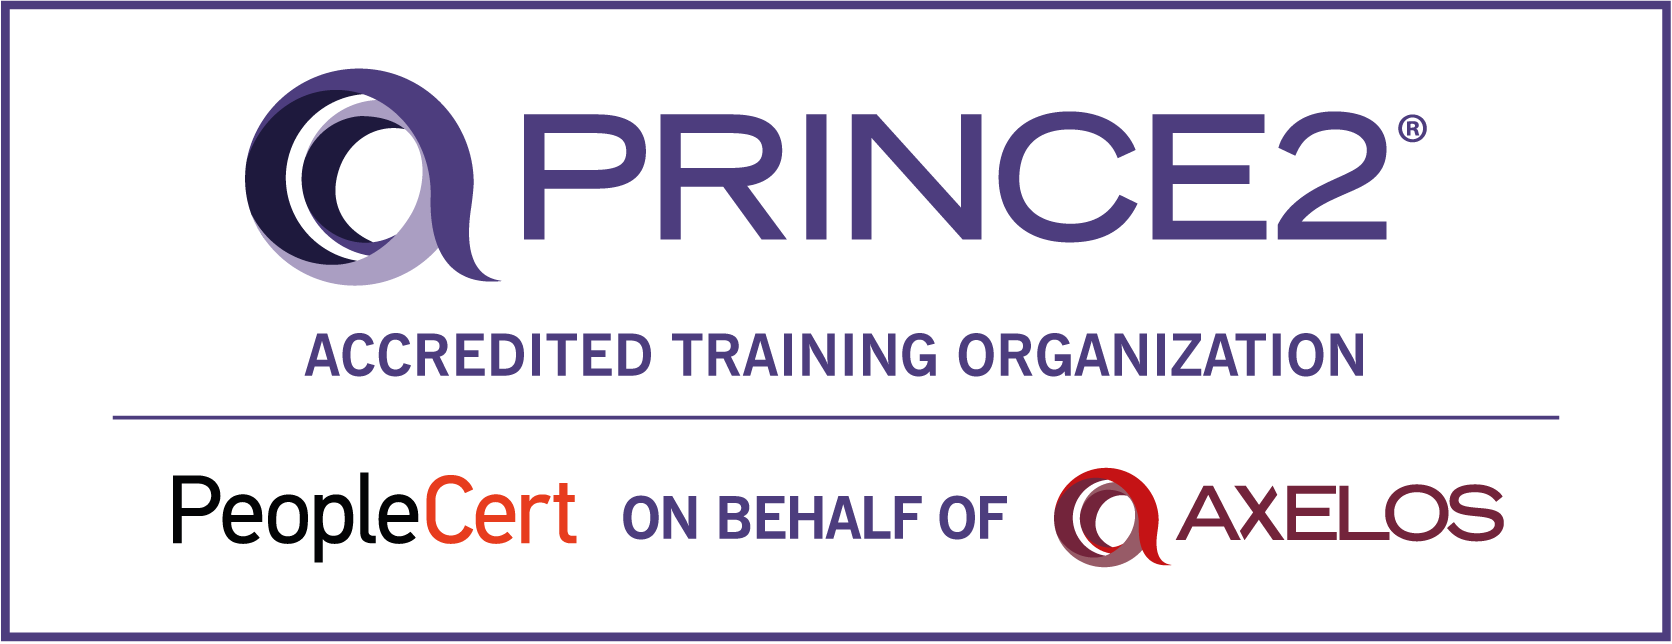 prince2 certification